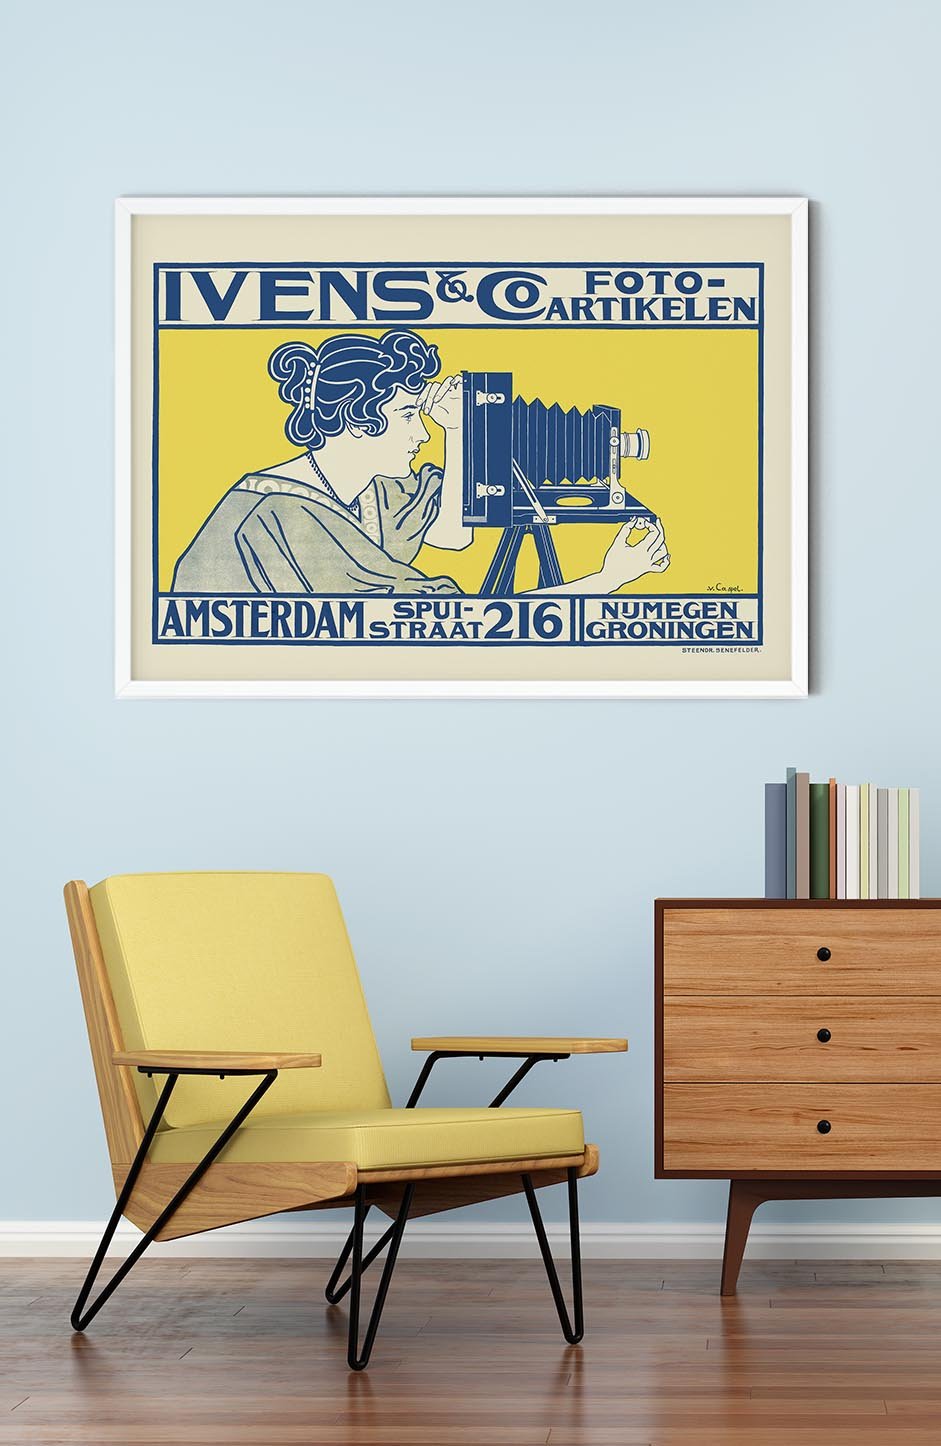 Ivens & Co Foto-Artikeln Vintage Advertising